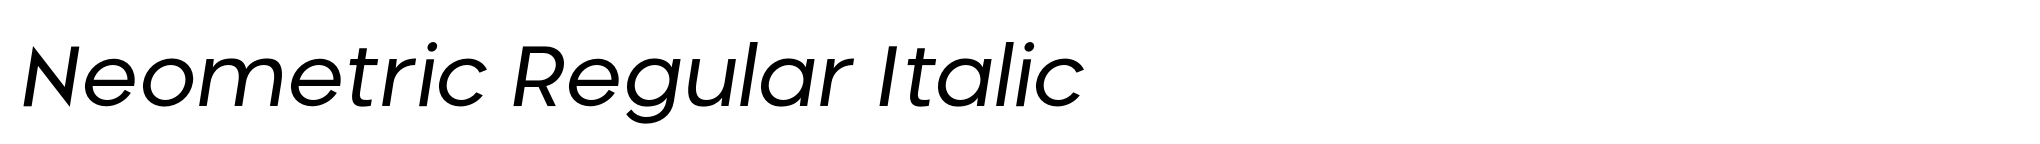 Neometric Regular Italic image